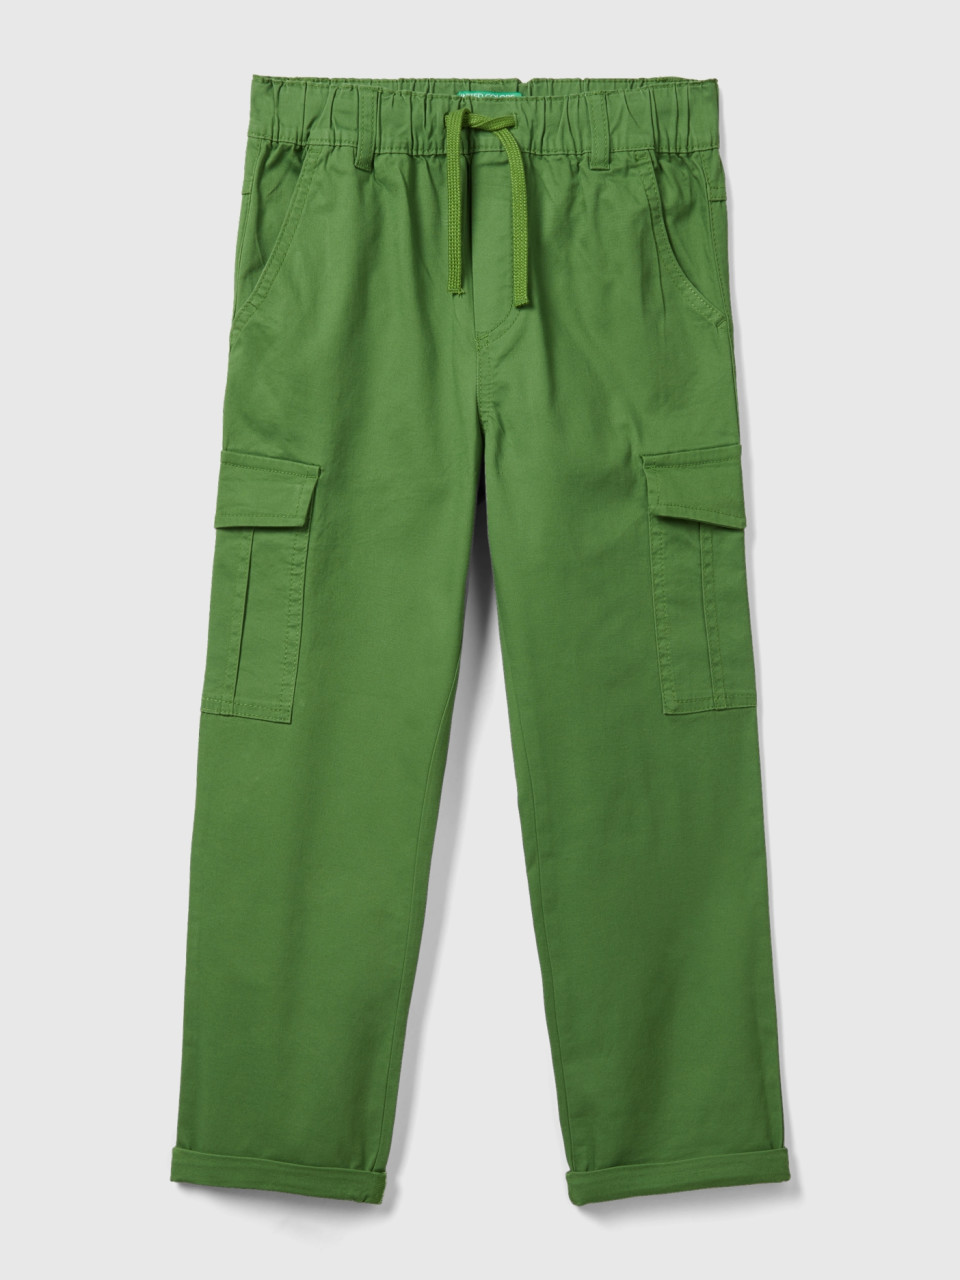 Benetton, Pantaloni Cargo Straight, Verde Militare, Bambini